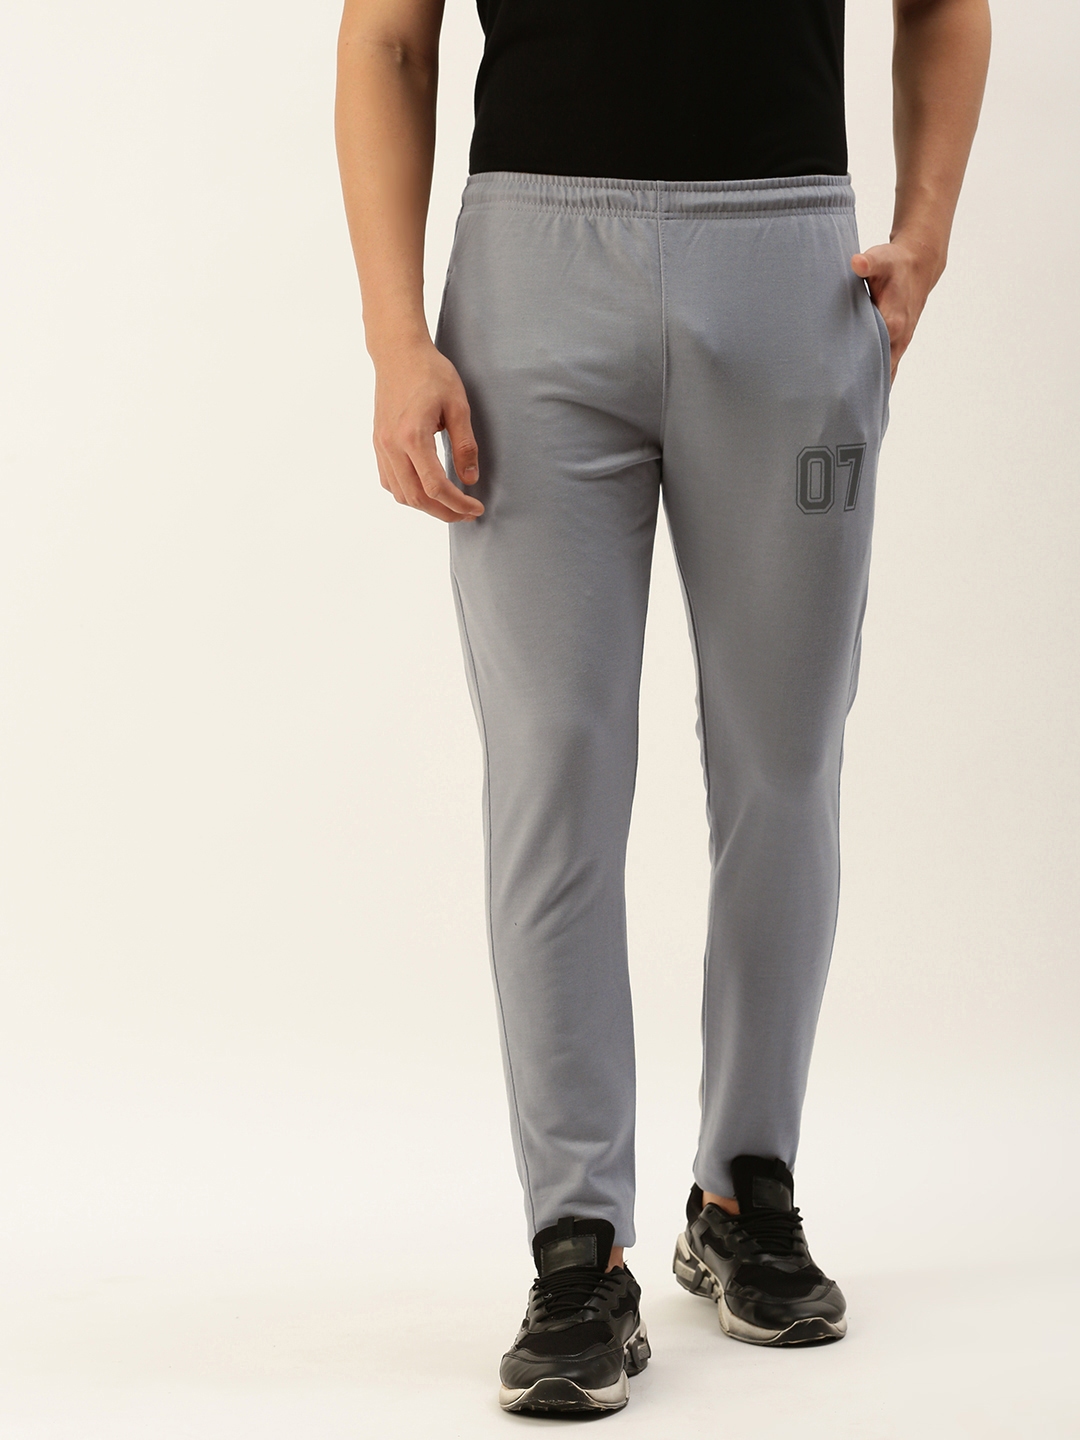 Sports52 wear Men Slim Fit Varsity Printed Cotton Track Pants